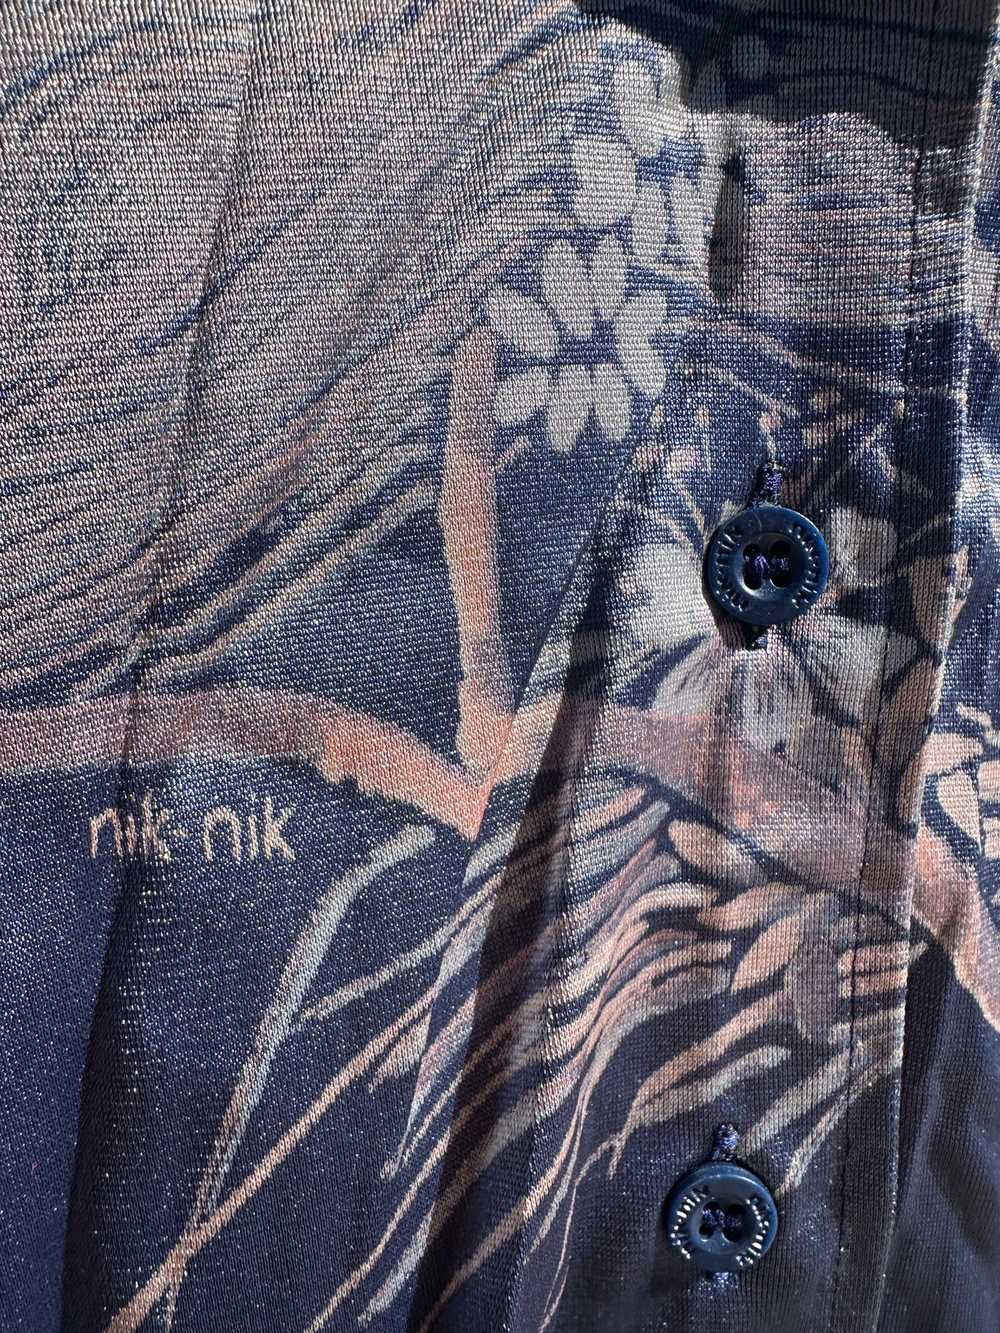 1970's Nik Nik Disco Shirt - image 7